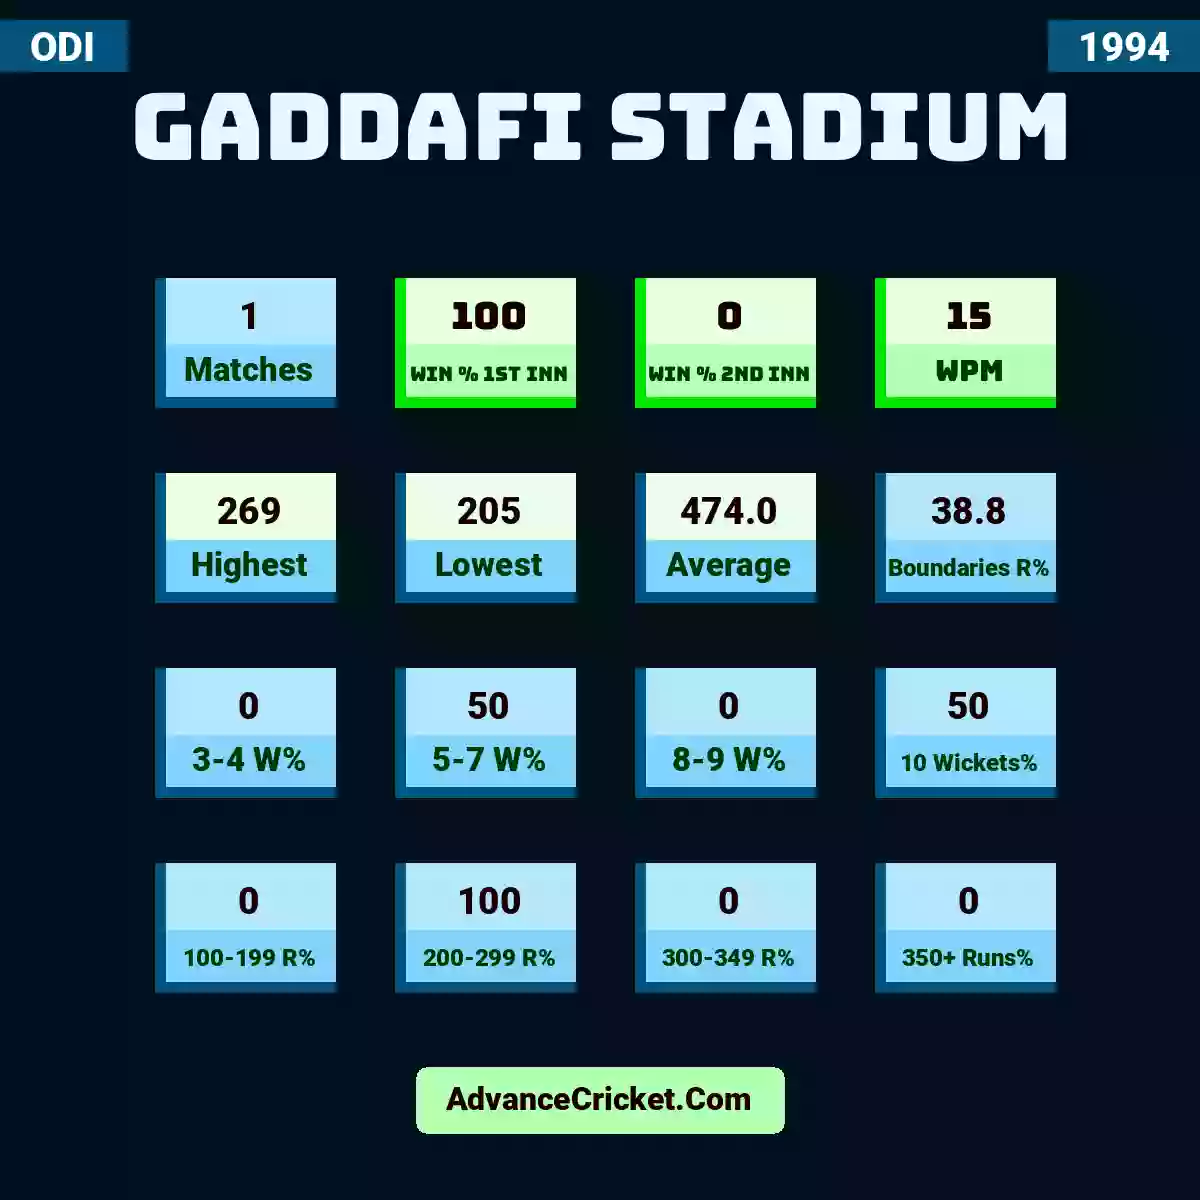 Image showing Gaddafi Stadium with Matches: 1, Win % 1st Inn: 100, Win % 2nd Inn: 0, WPM: 15, Highest: 269, Lowest: 205, Average: 474.0, Boundaries R%: 38.8, 3-4 W%: 0, 5-7 W%: 50, 8-9 W%: 0, 10 Wickets%: 50, 100-199 R%: 0, 200-299 R%: 100, 300-349 R%: 0, 350+ Runs%: 0.